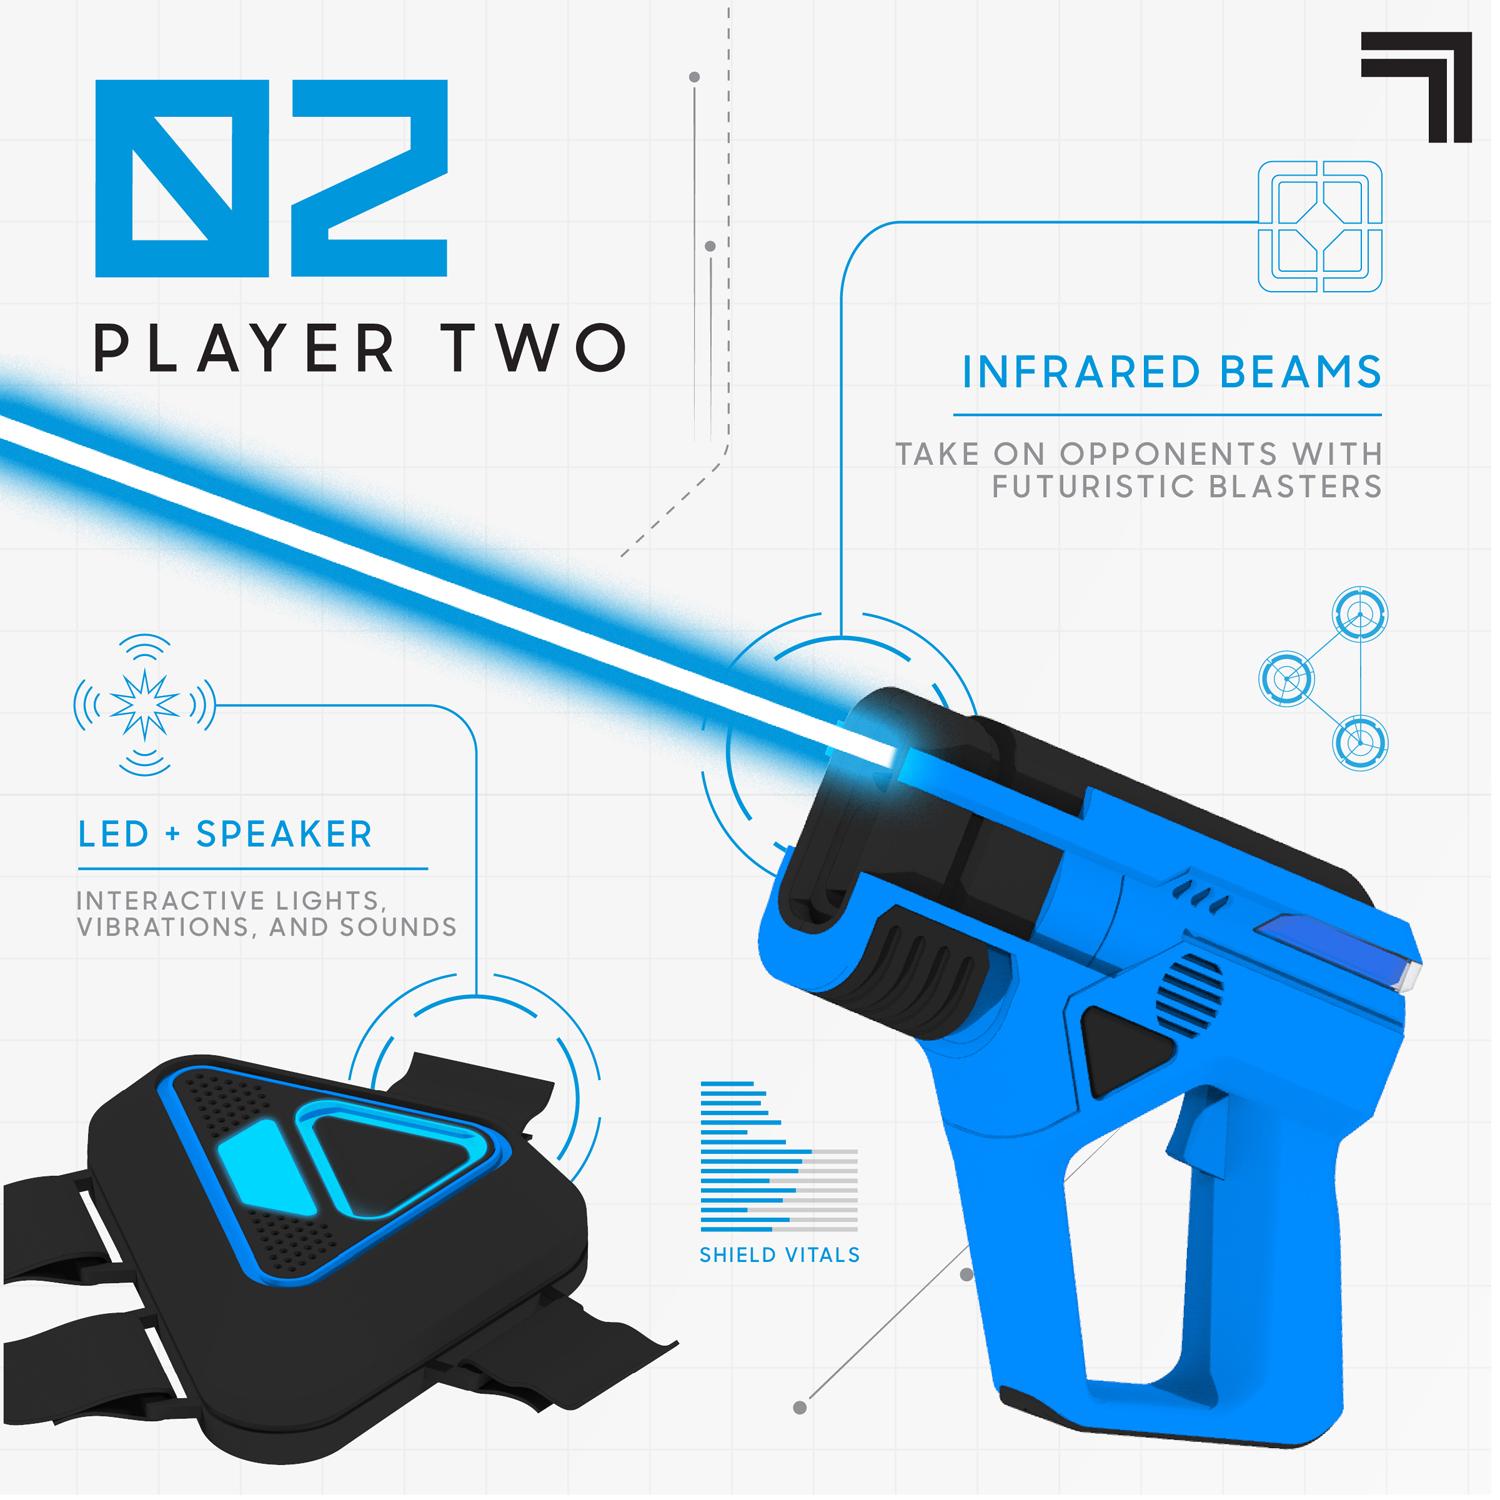 2 Player Laser Tag Shooting Game